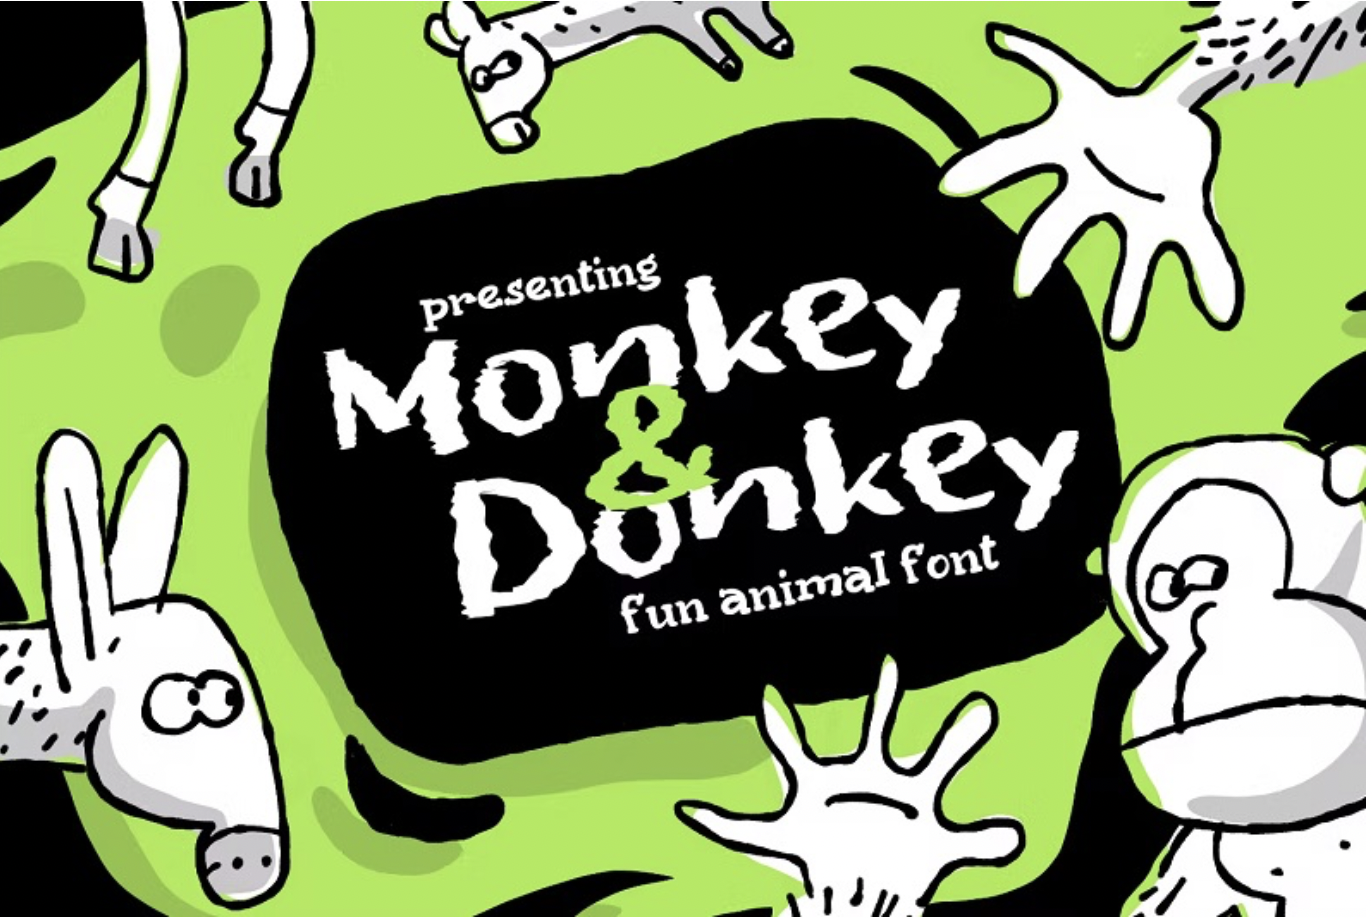 monkey & donkey book font